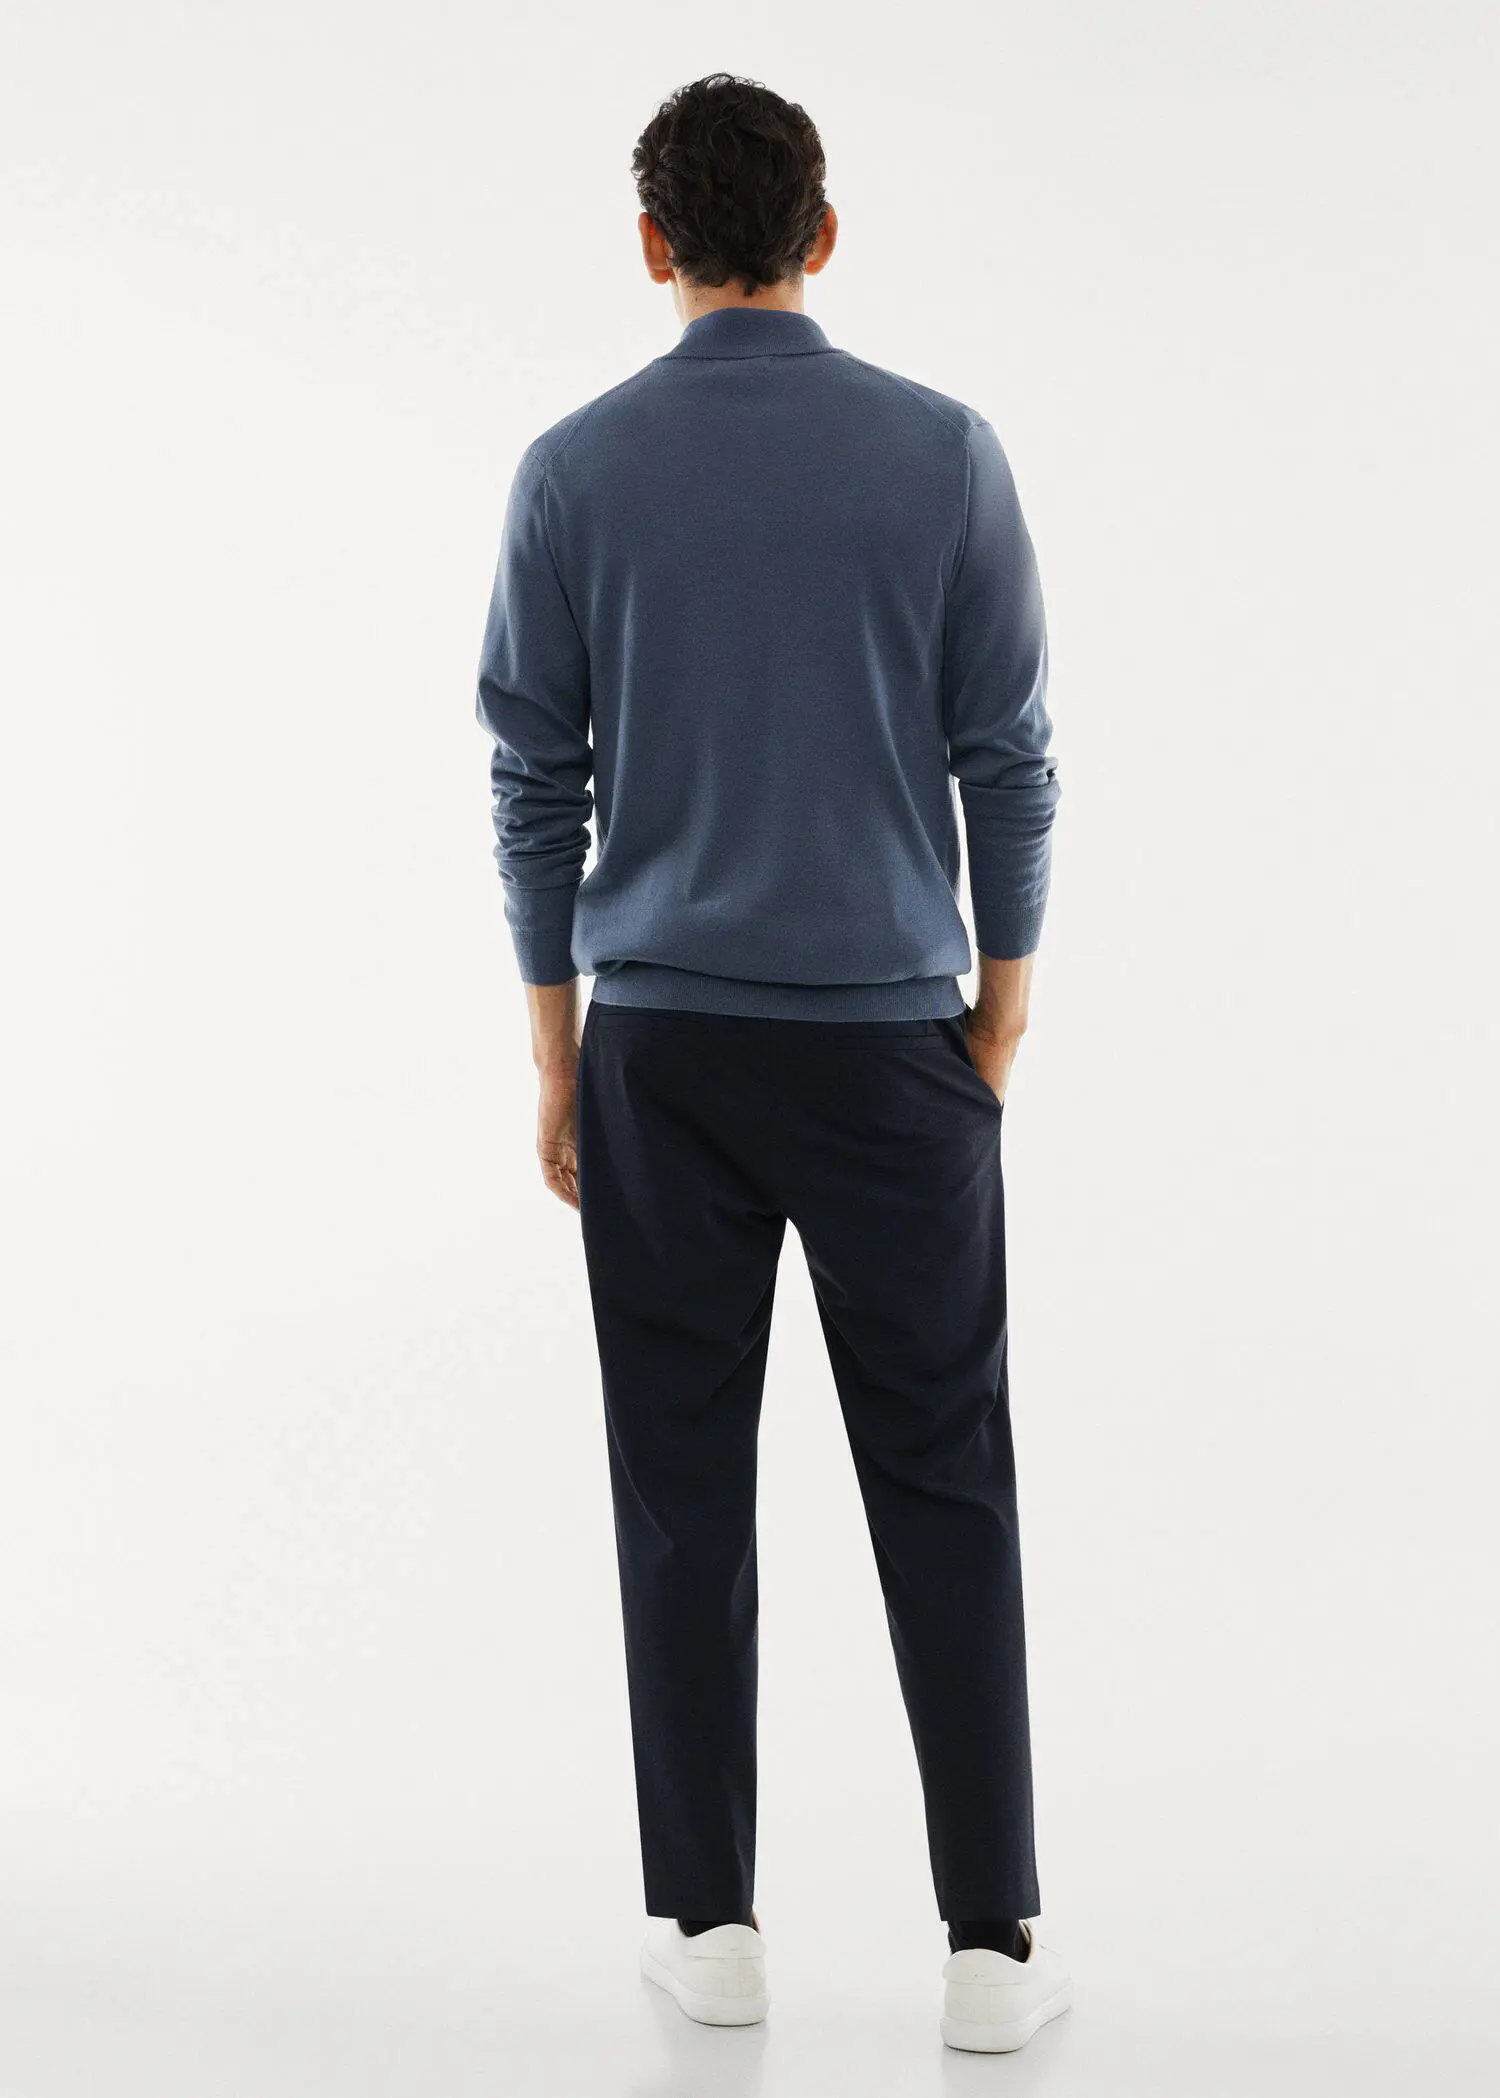 Mango 100% merino wool sweater with zipper collar. 3